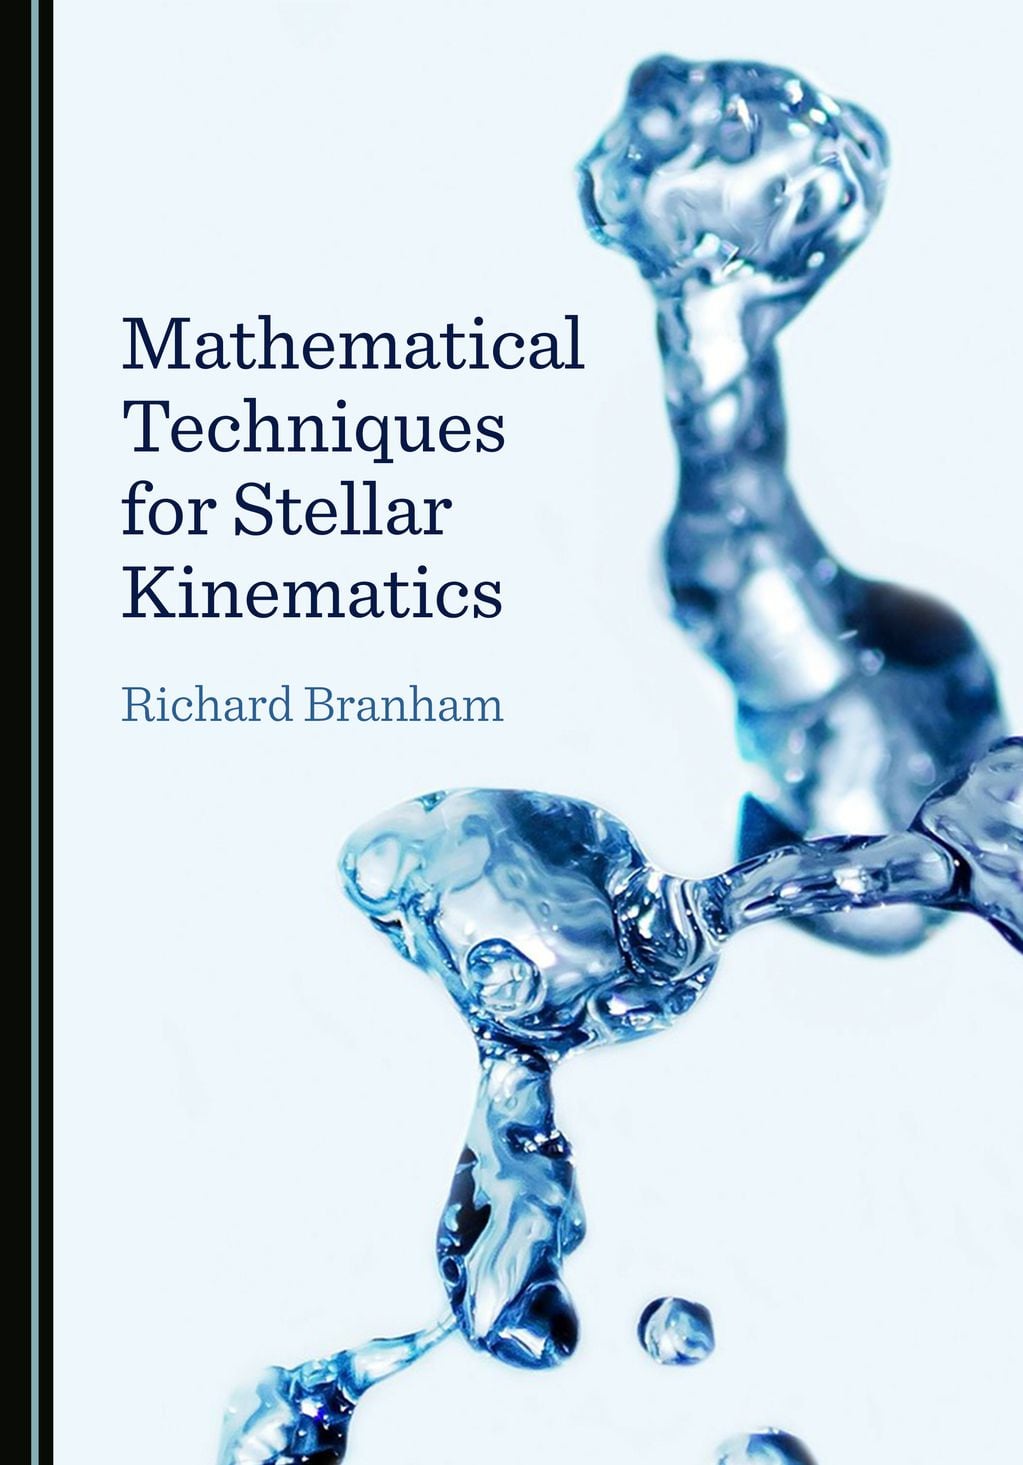 Libro Mathematical Techniques for Stellar Kinematics, de Richard Branham